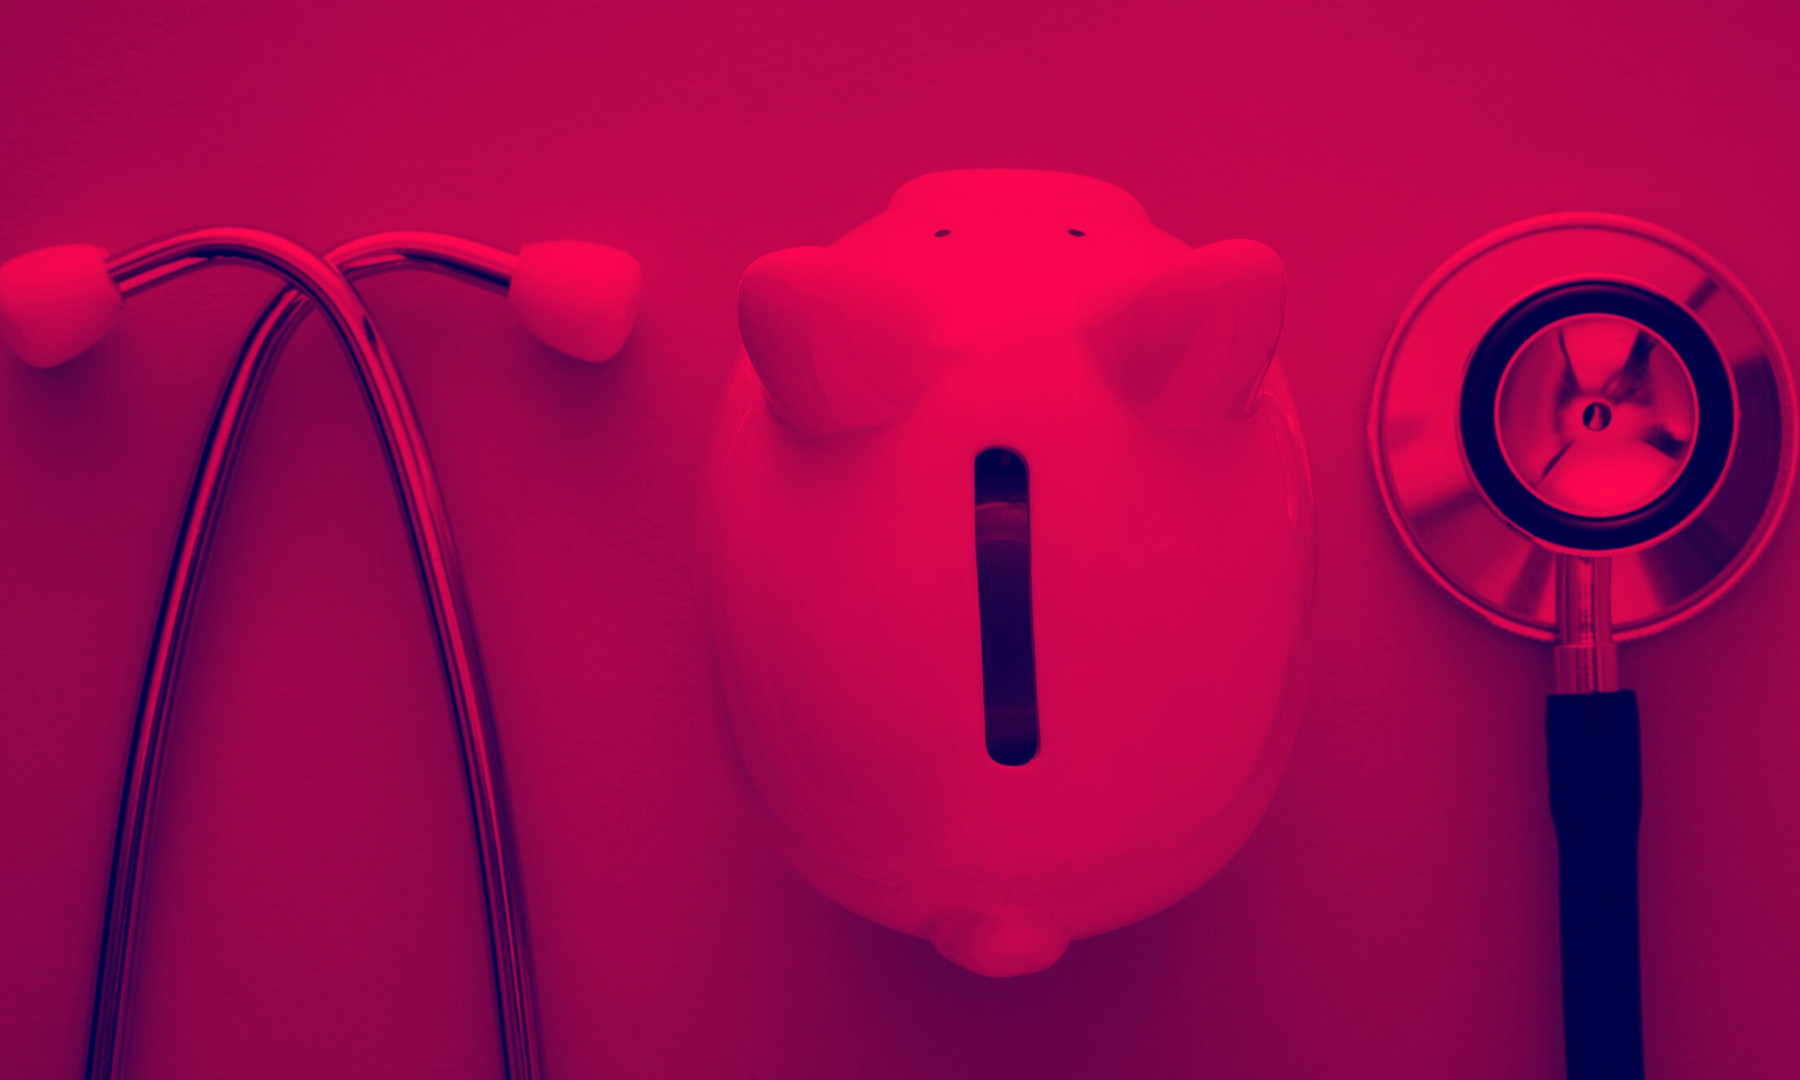 A piggy bank next to a stethoscope